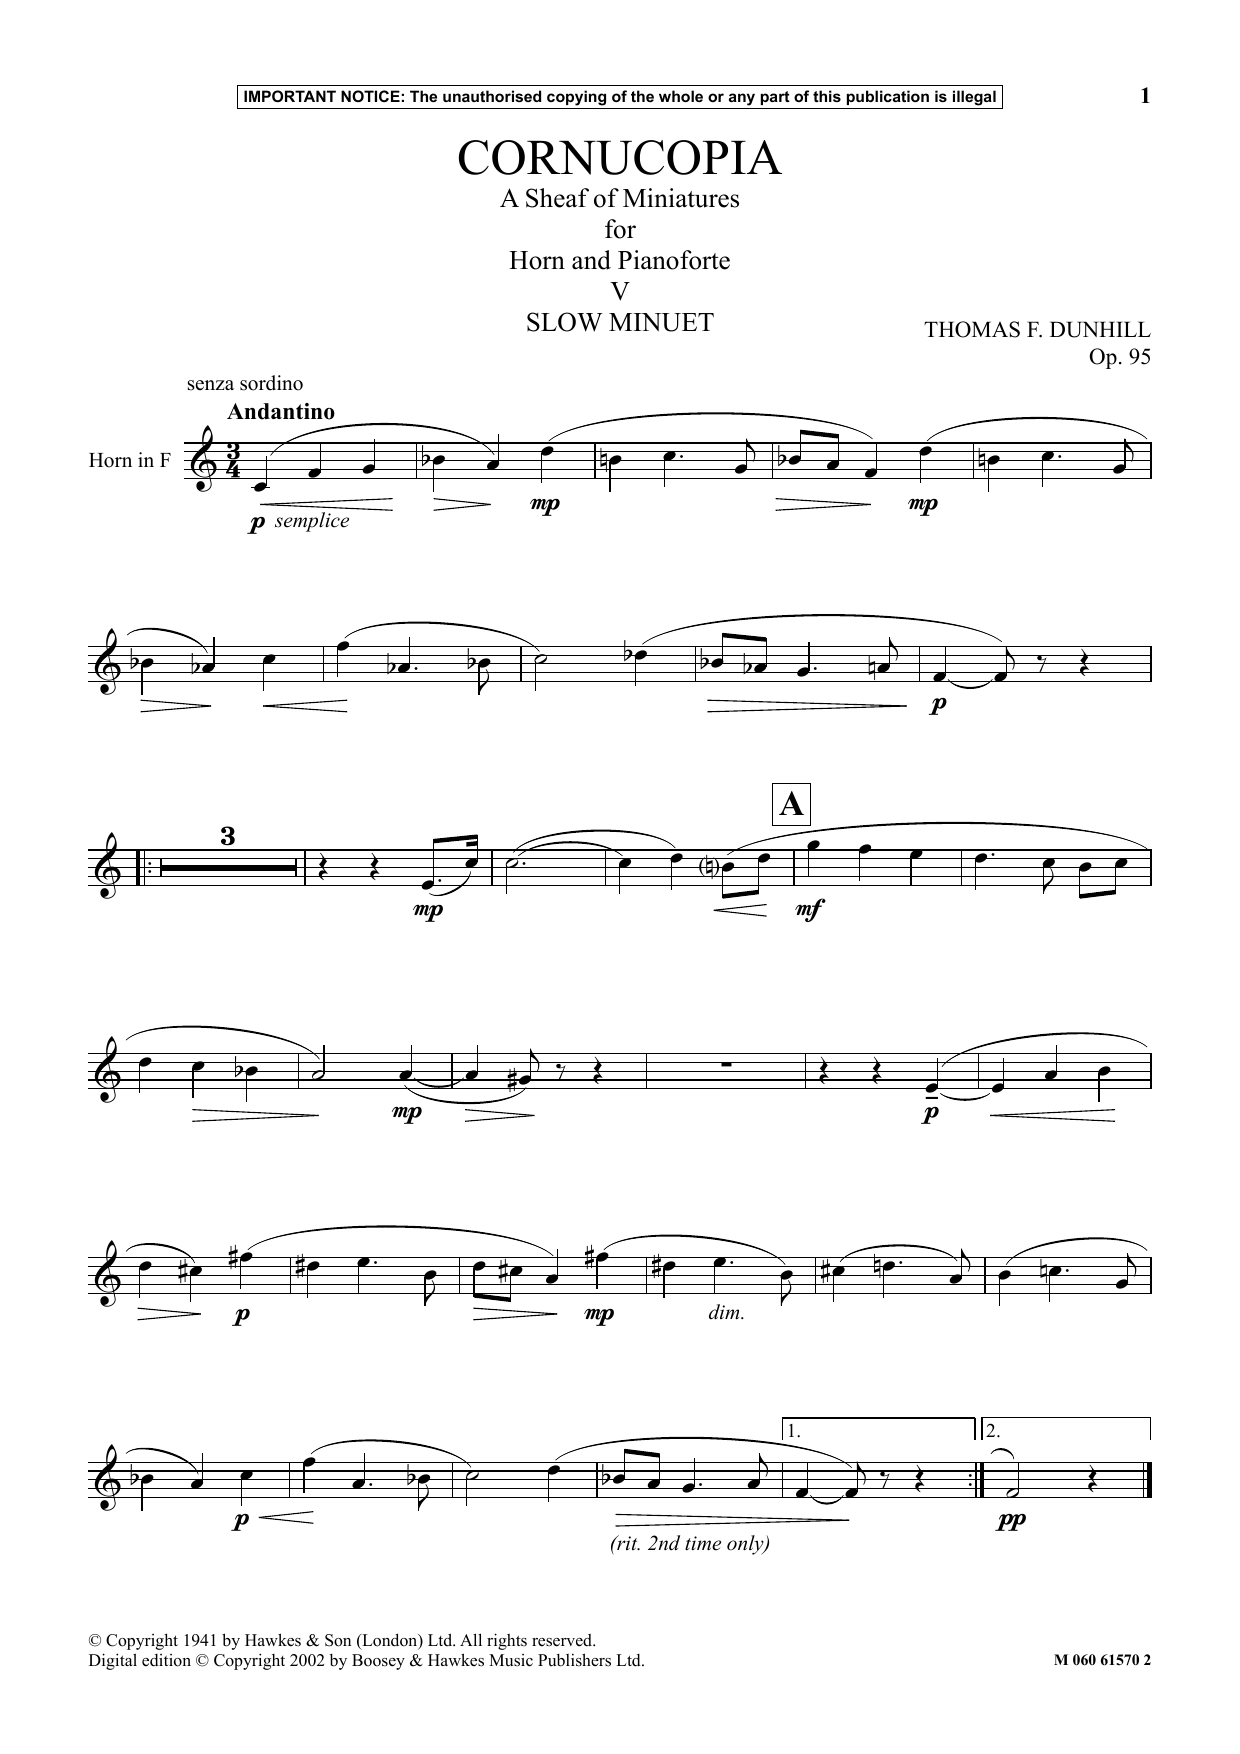 Cornucopia: A Sheaf Of Miniatures For Horn And Pianoforte (V) (Instrumental Solo) von Thomas F. Dunhill